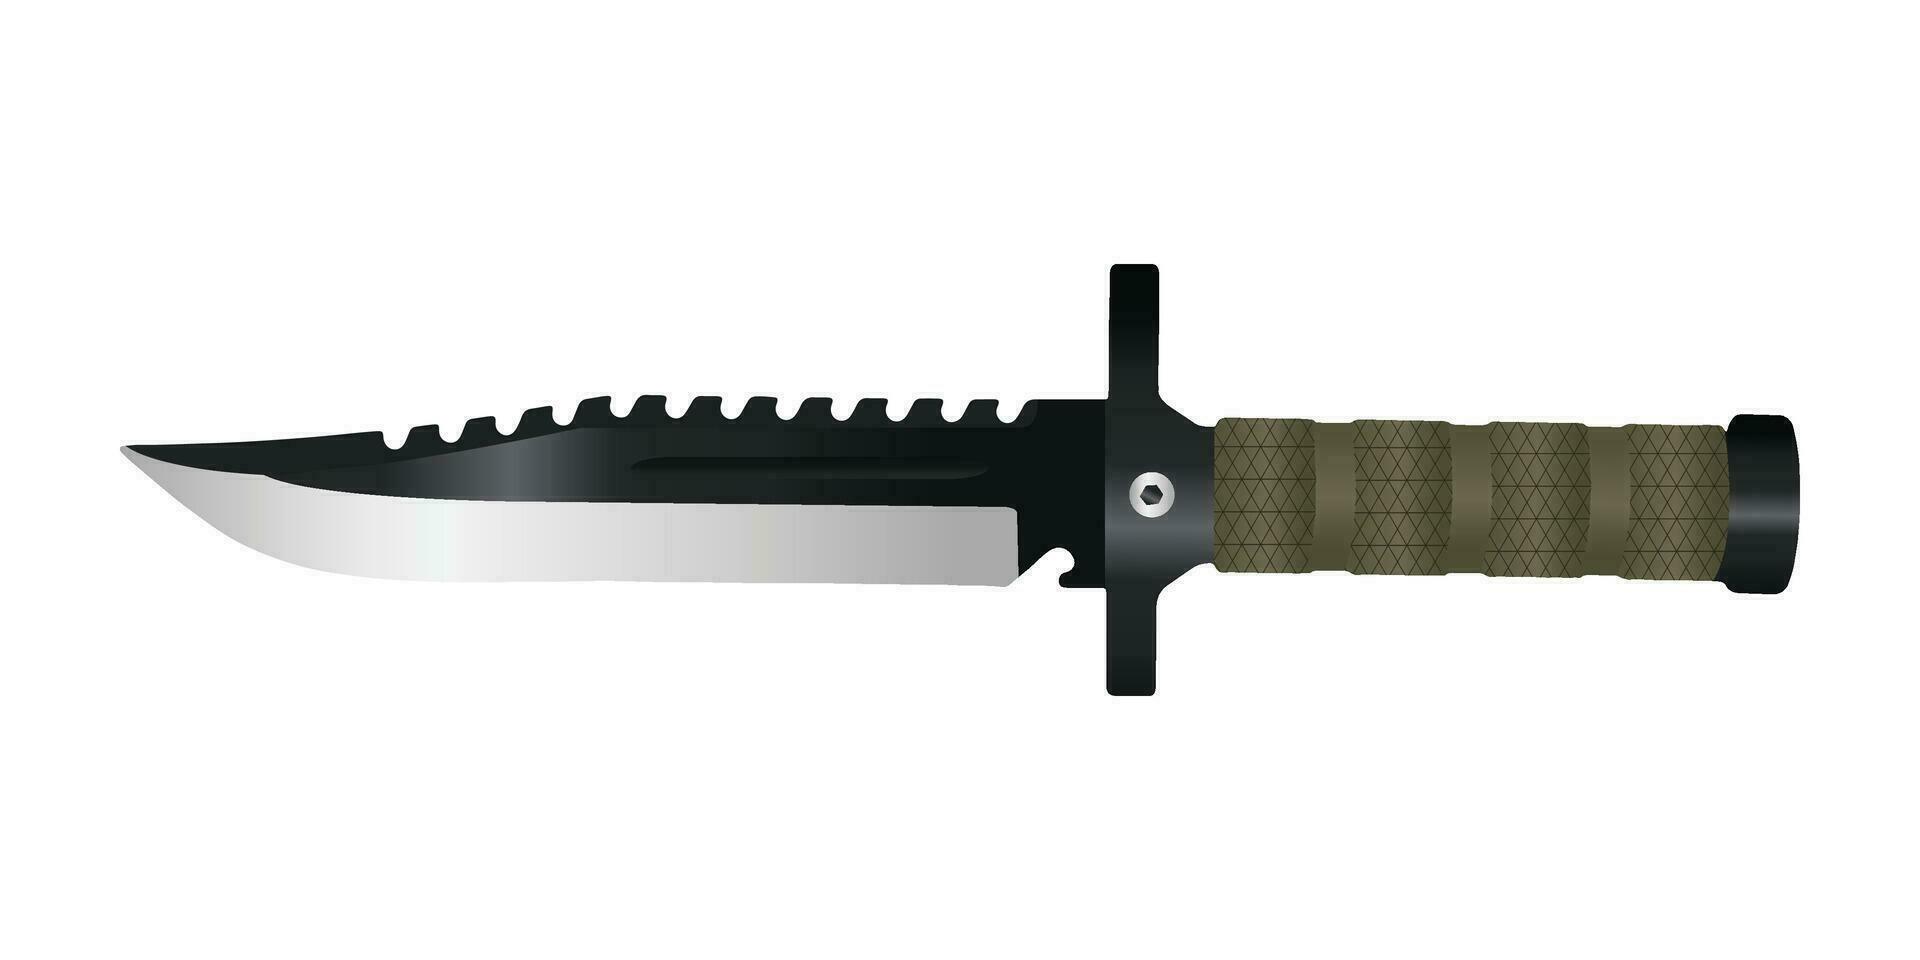 Survival Military Combat Knife Vector Illustration